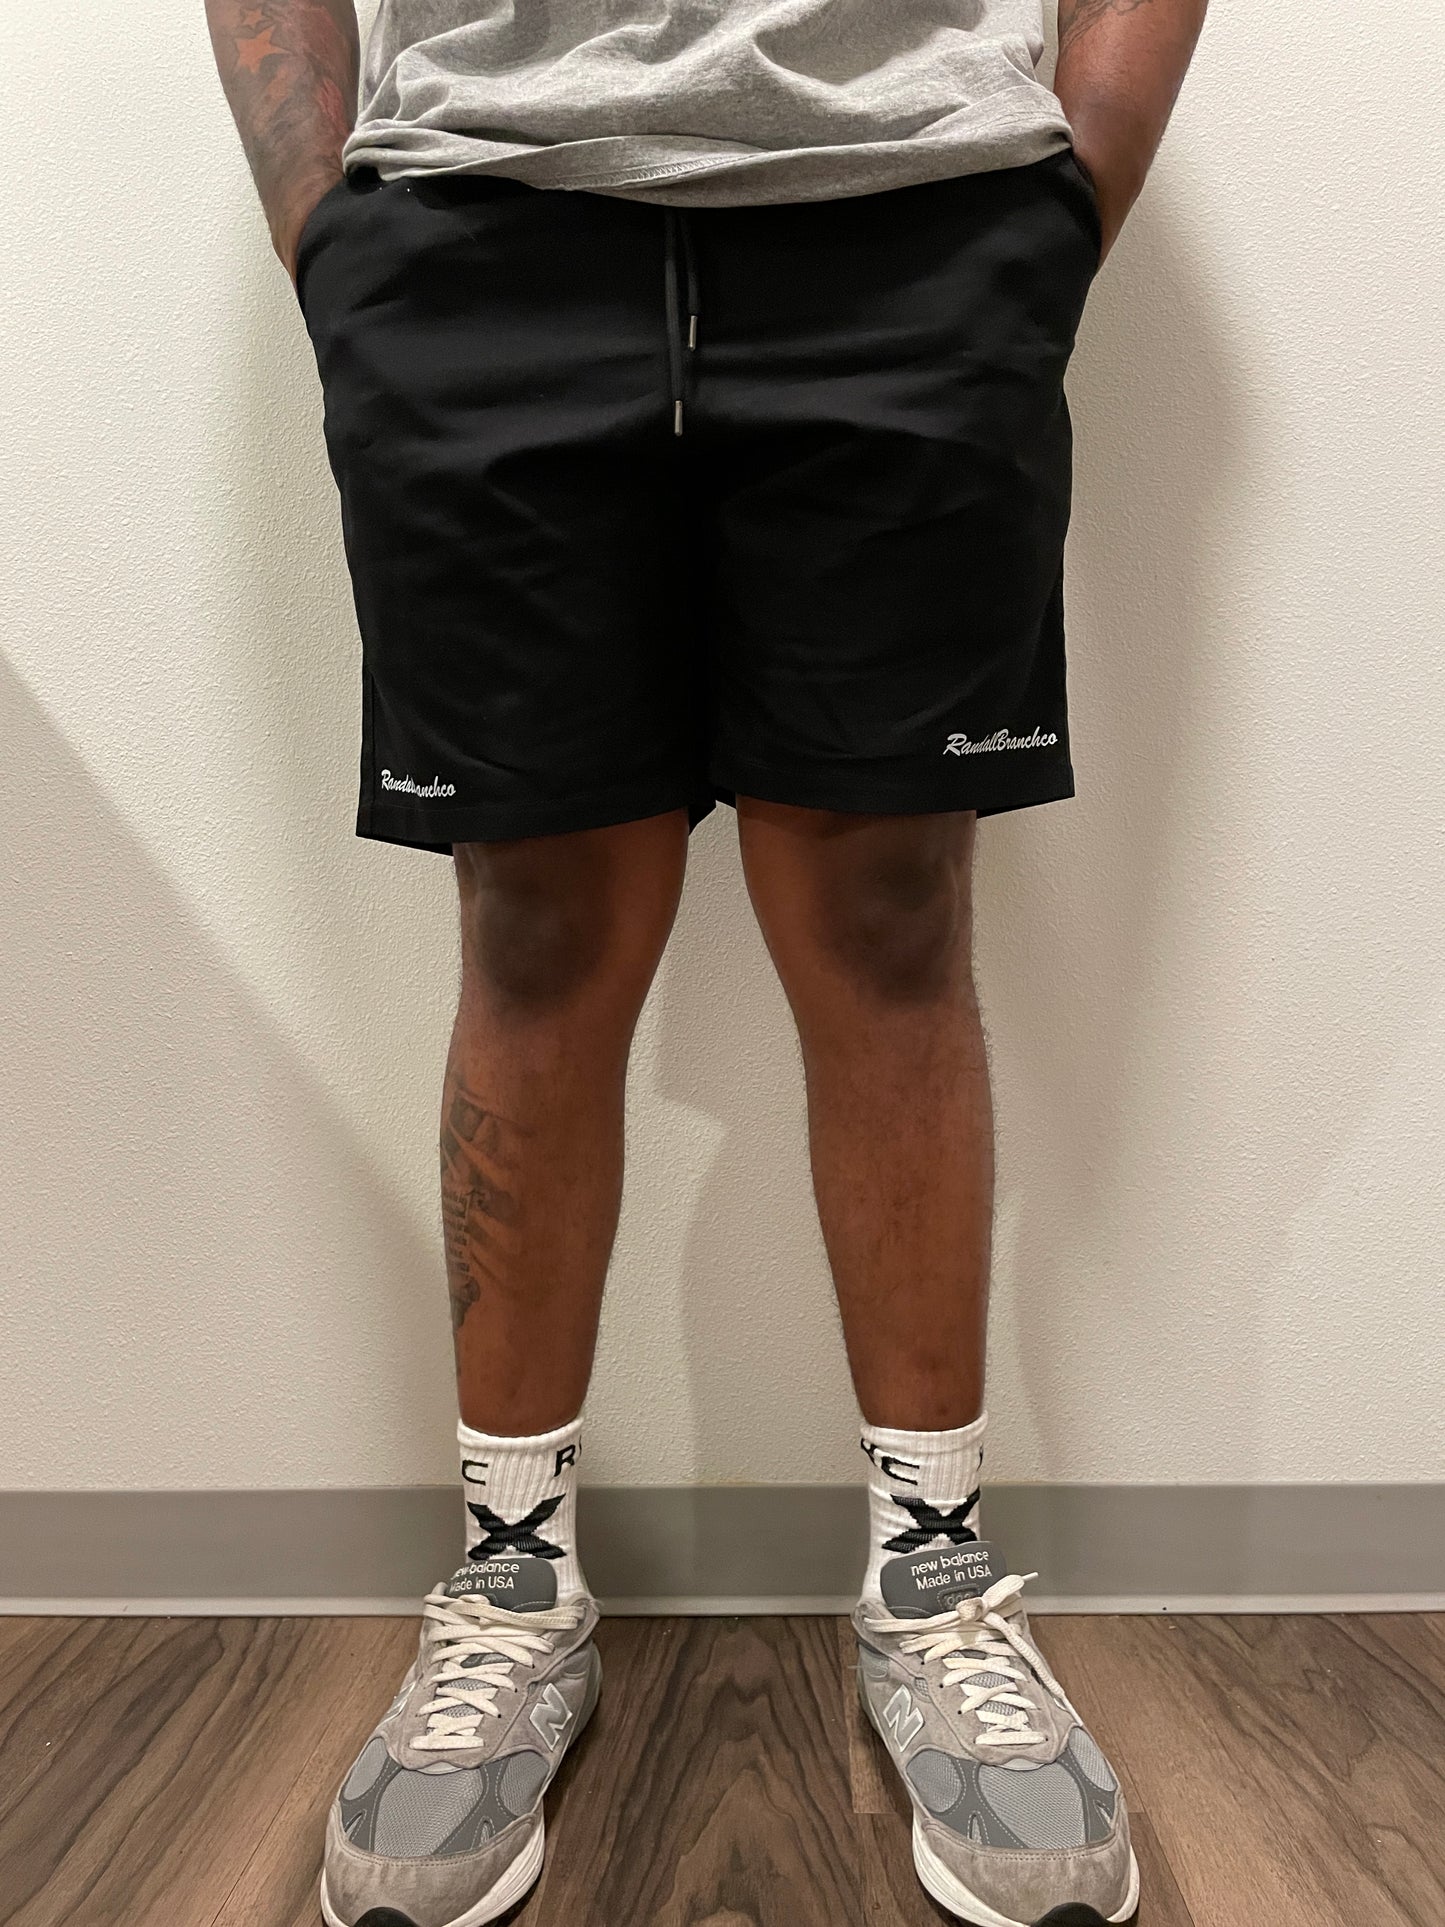 RandallBranchco black "mood" shorts